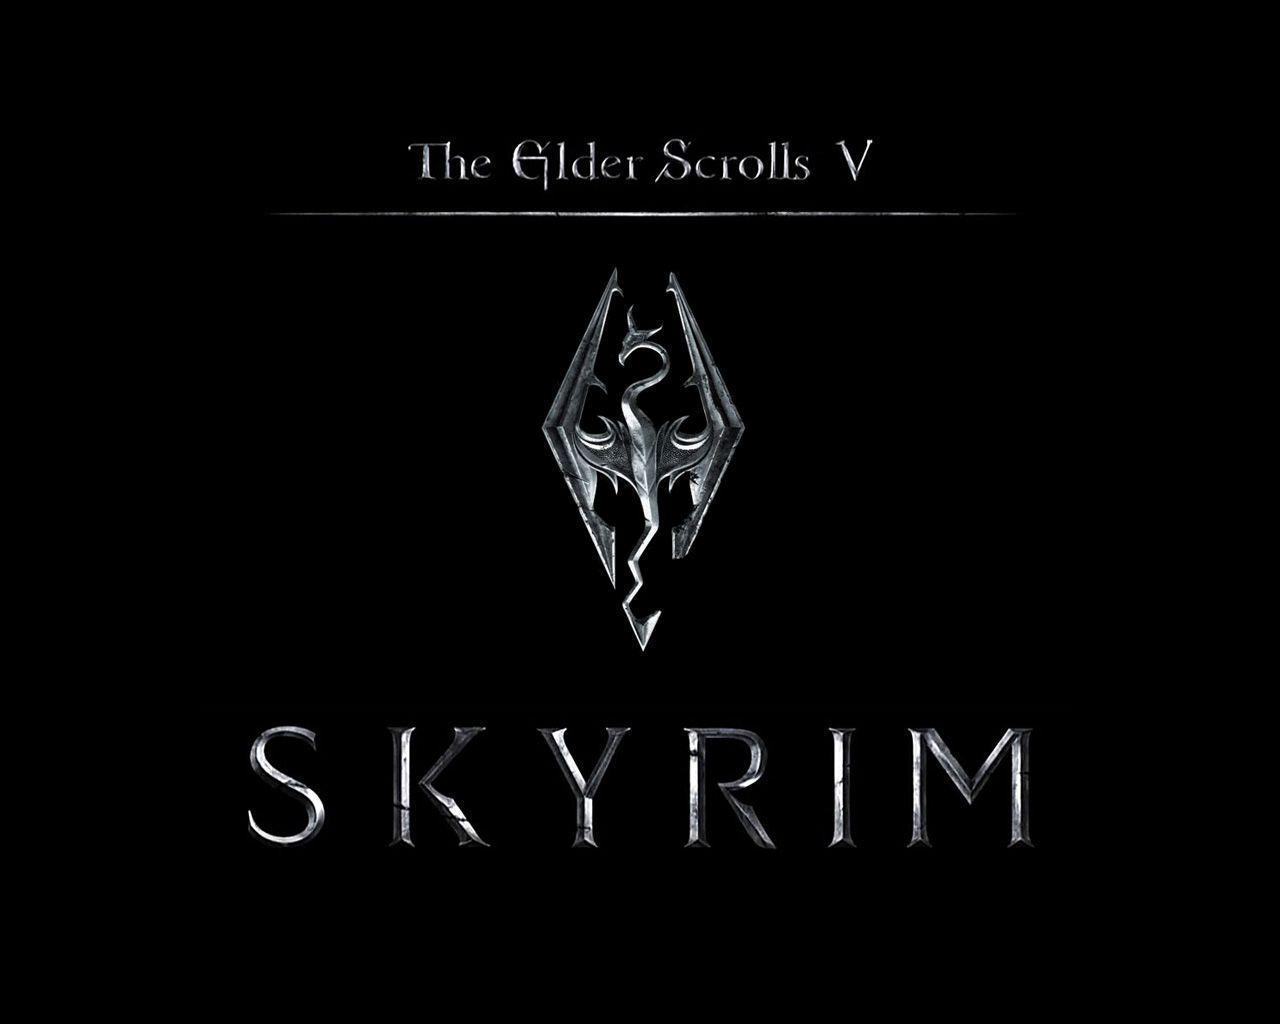 The Elder Scrolls V: Skyrim Wallpaper in 1280x1024